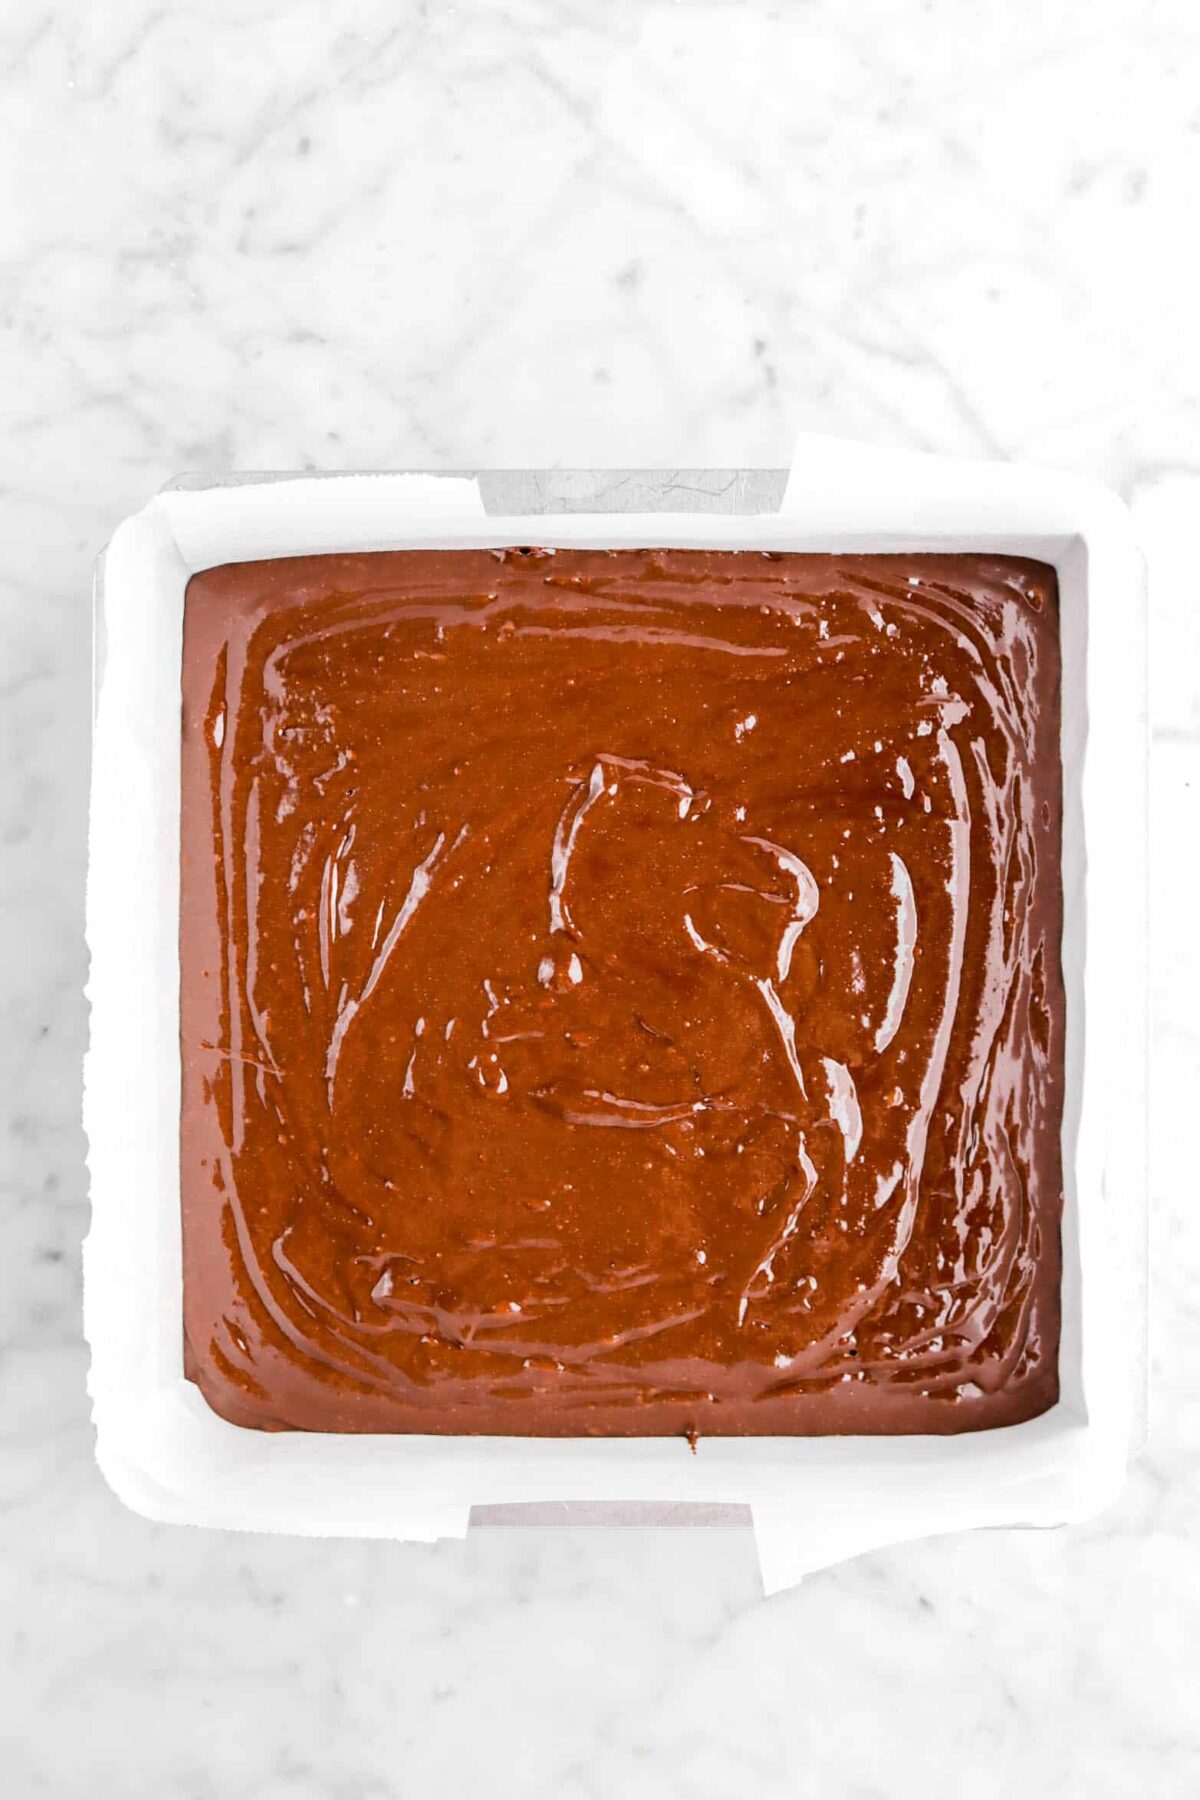 brownie batter in lined cake pan